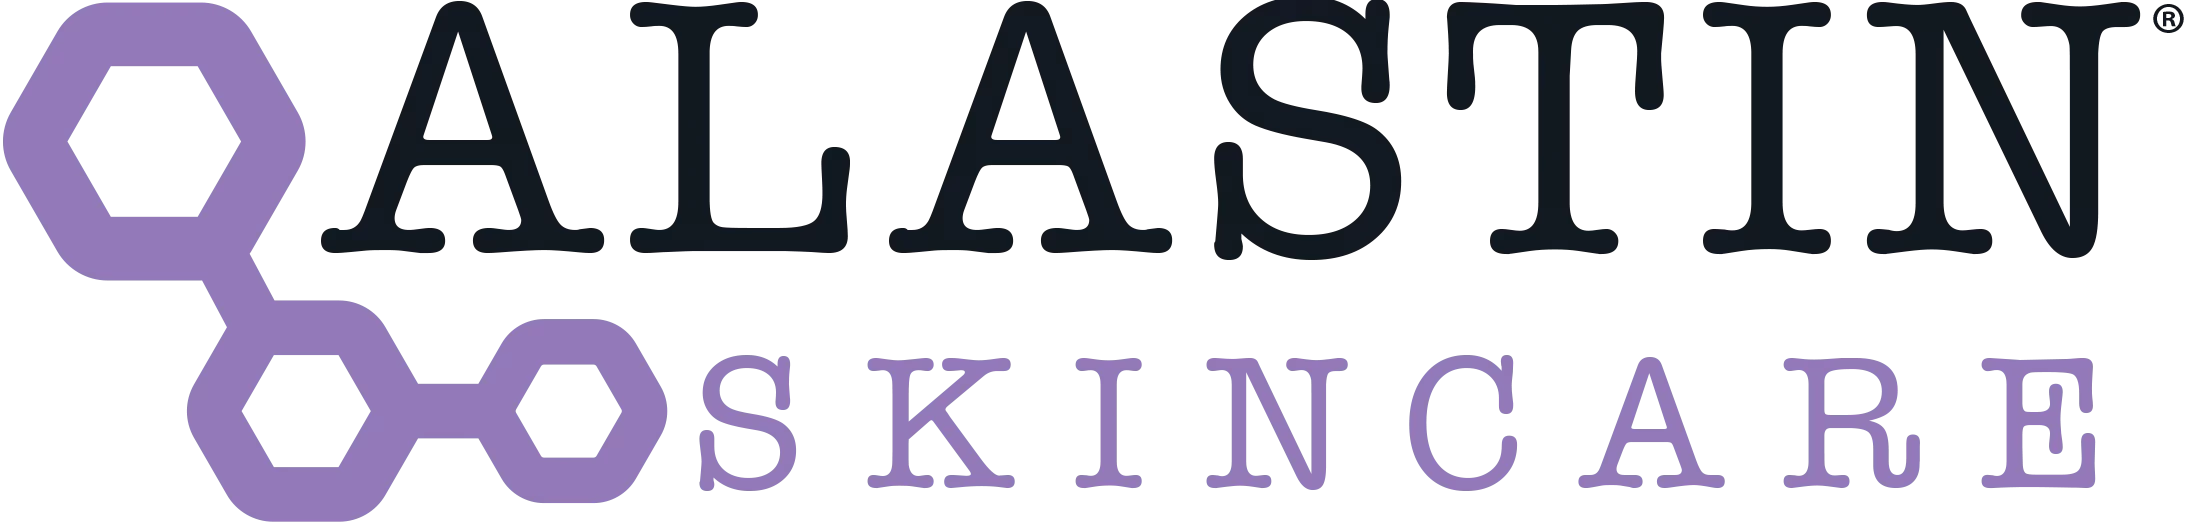 alastin logo rgb purple version